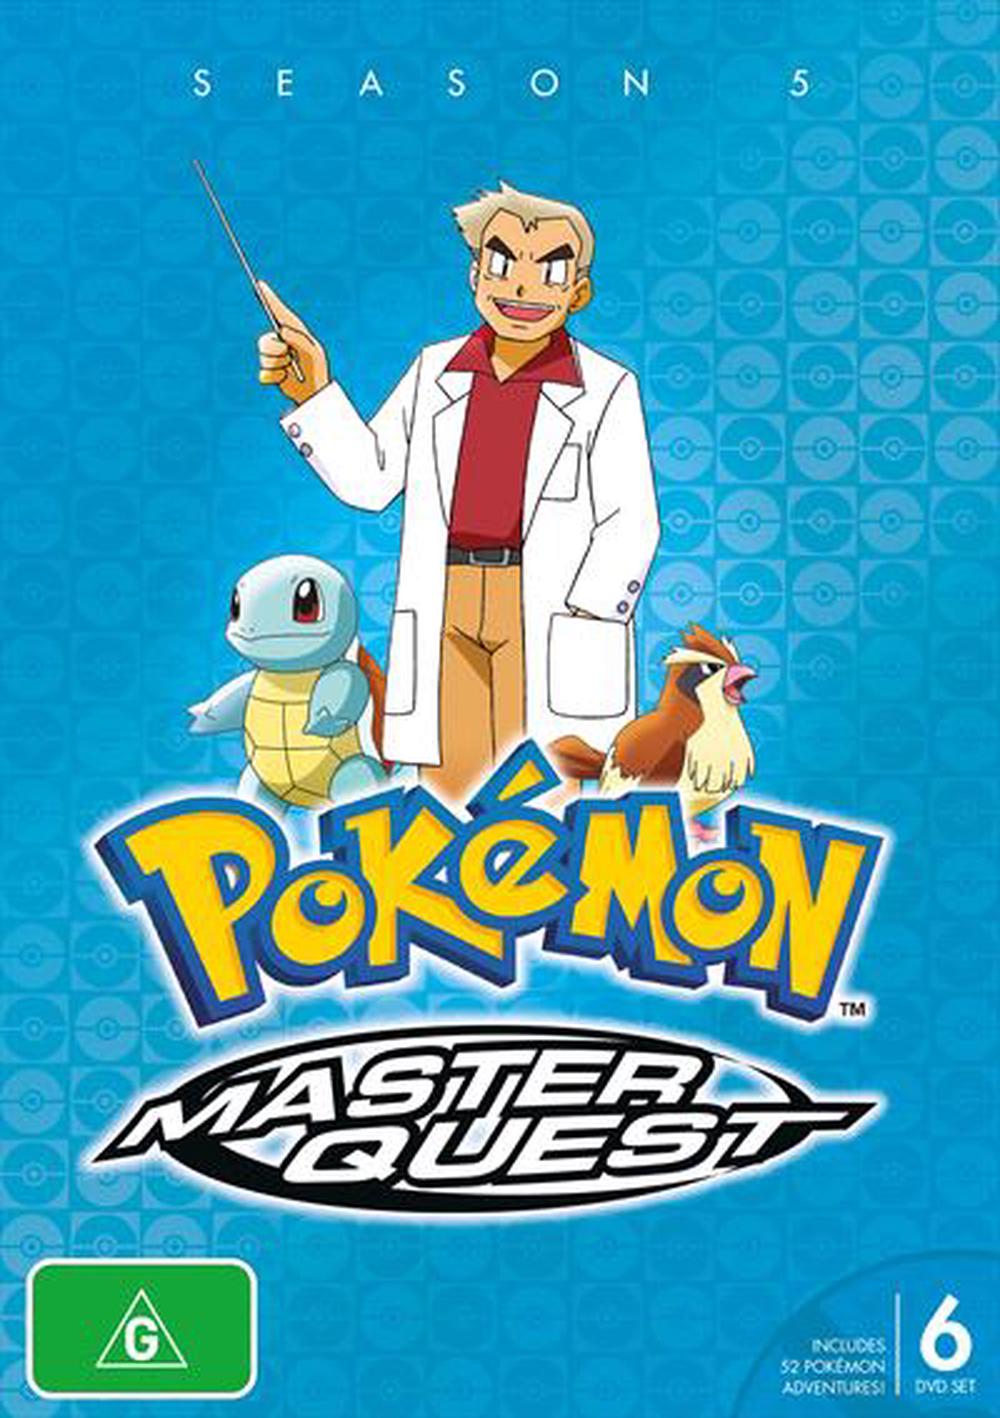 Pokemon - Season 5 : Master Quest, DVD | Buy online at The Nile